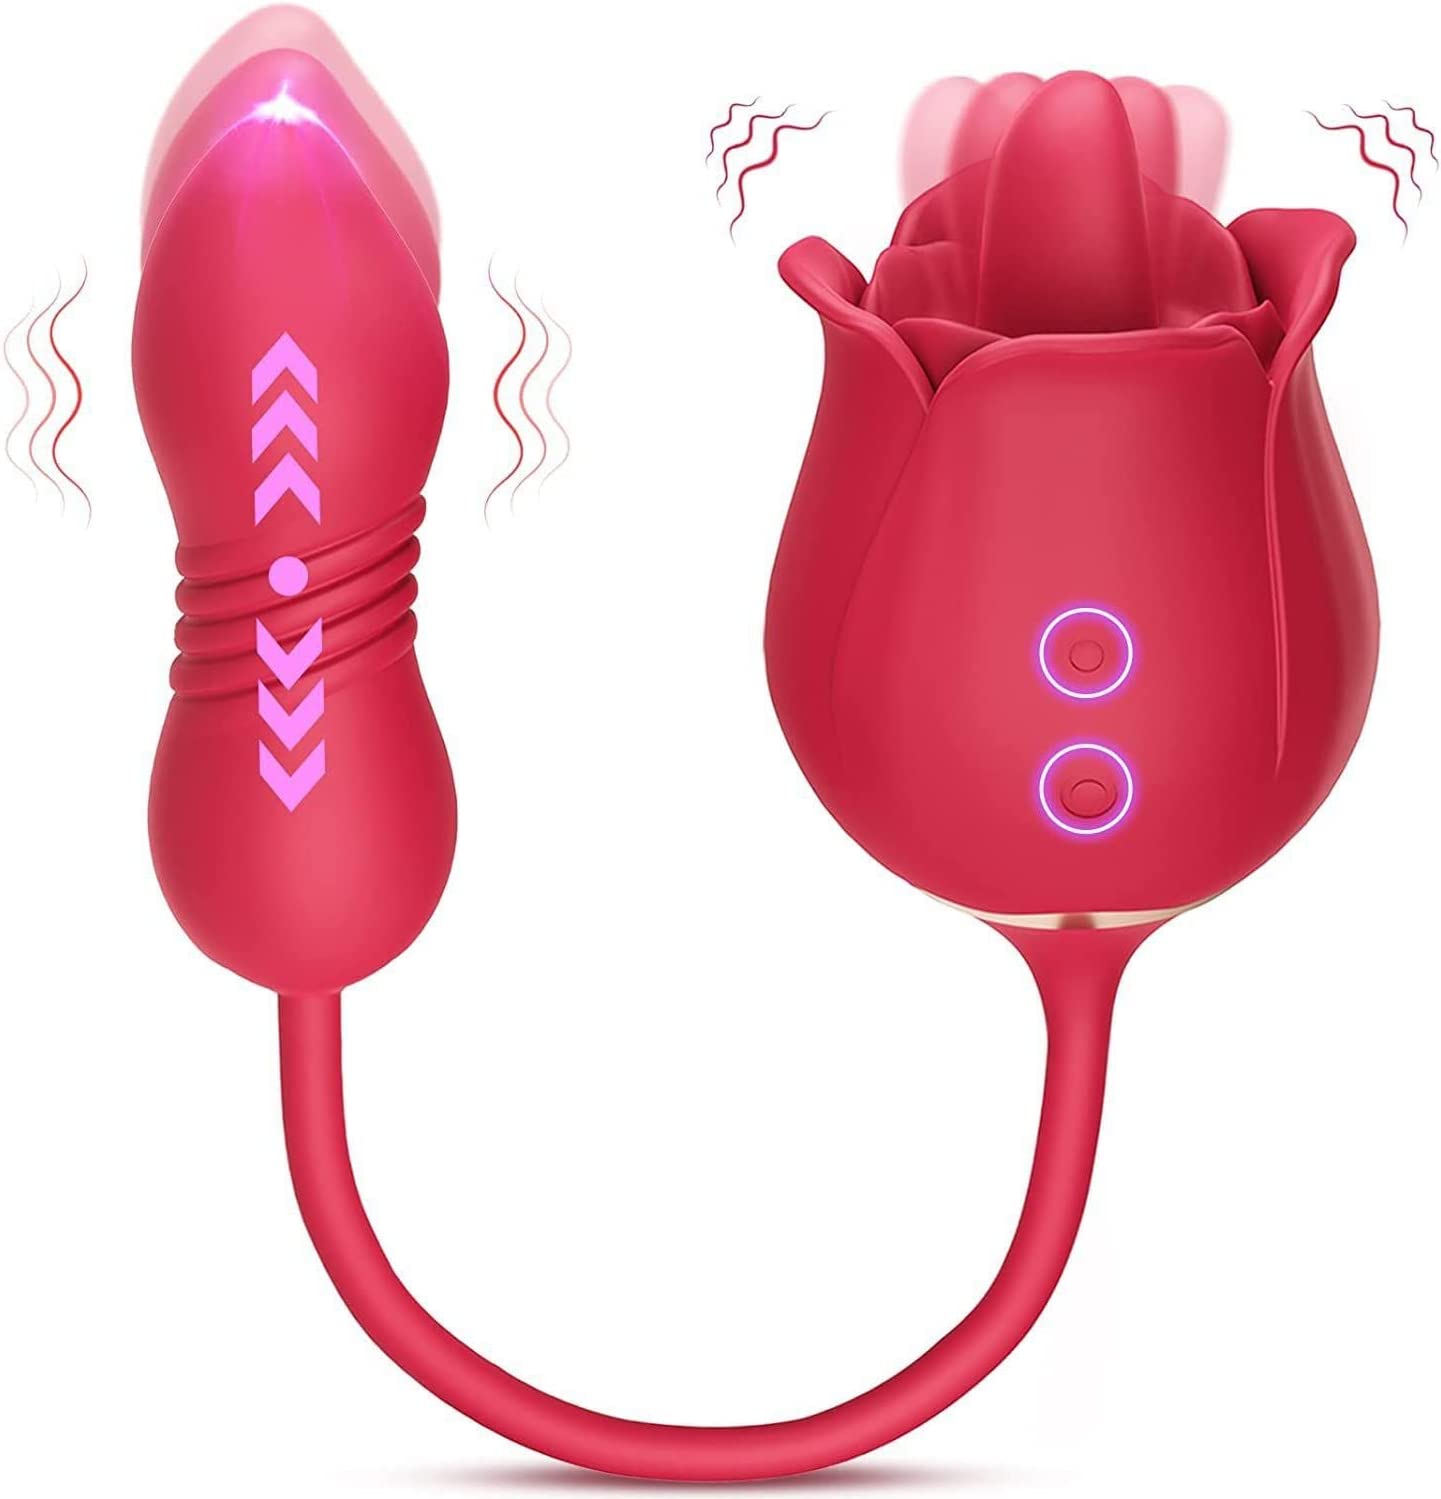 Tongue Rose Stimulator Rose Sexy Toy for Women Clitoris Stimulator